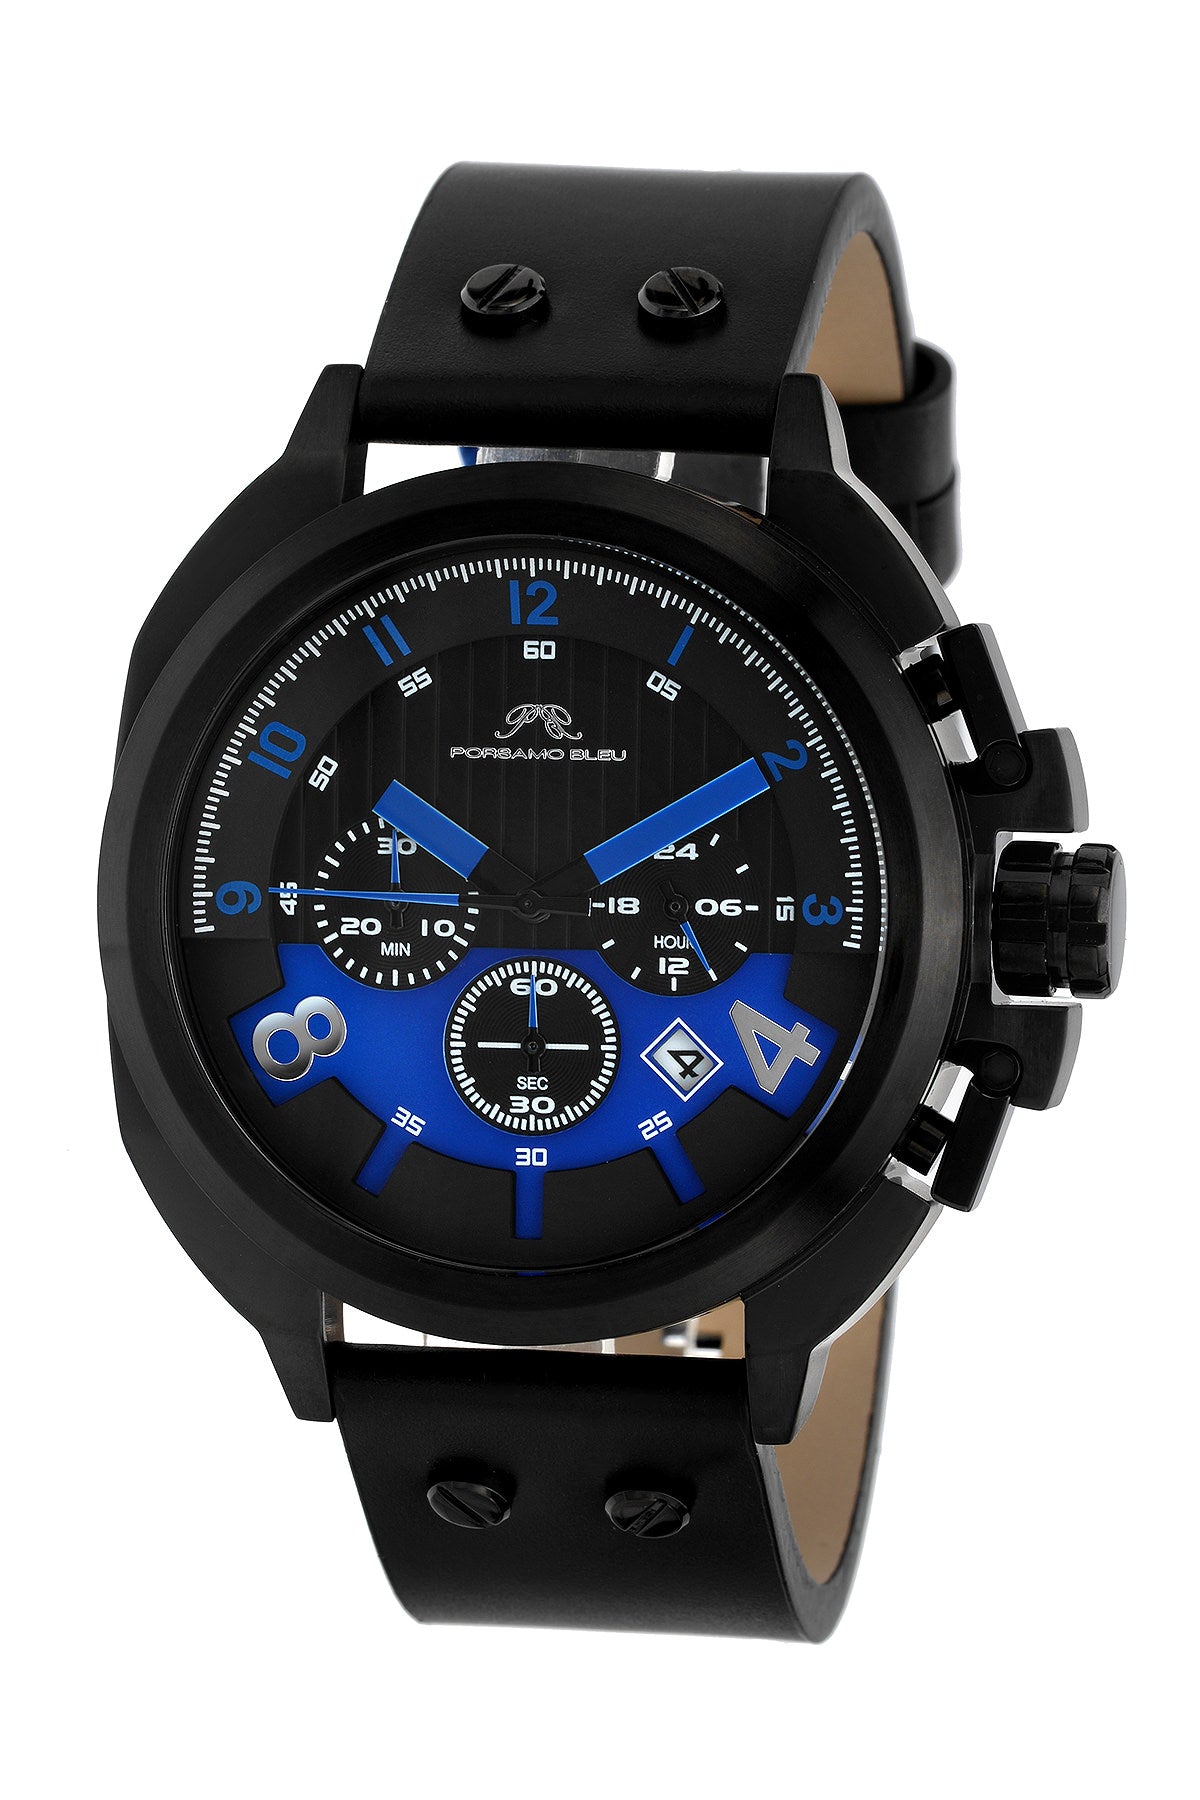 Porsamo Bleu Connor luxury chronograph men's watch, genuine leather band, black, blue 421ACOL